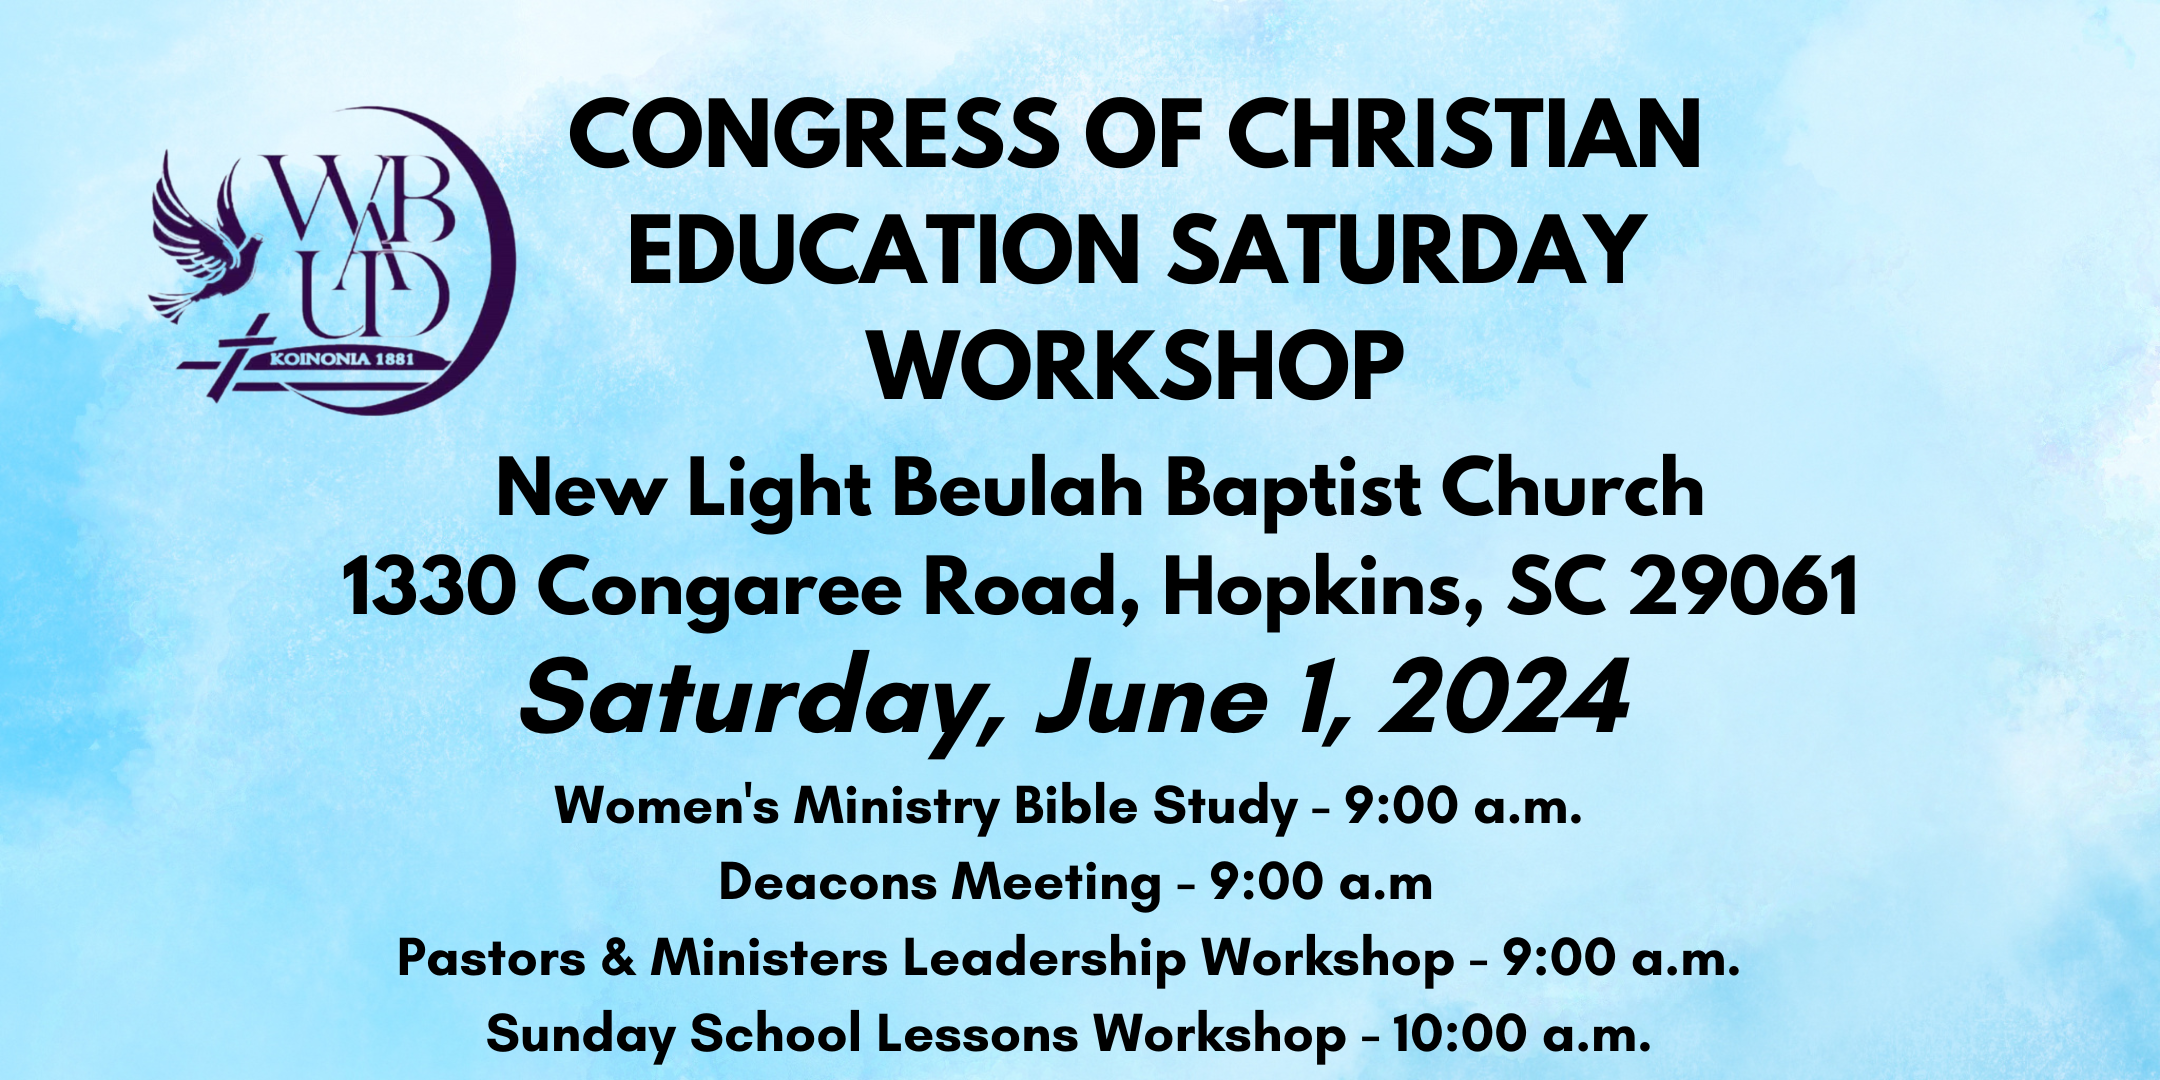 Congress of Christian Education Saturday Workshop – June 1, 2024